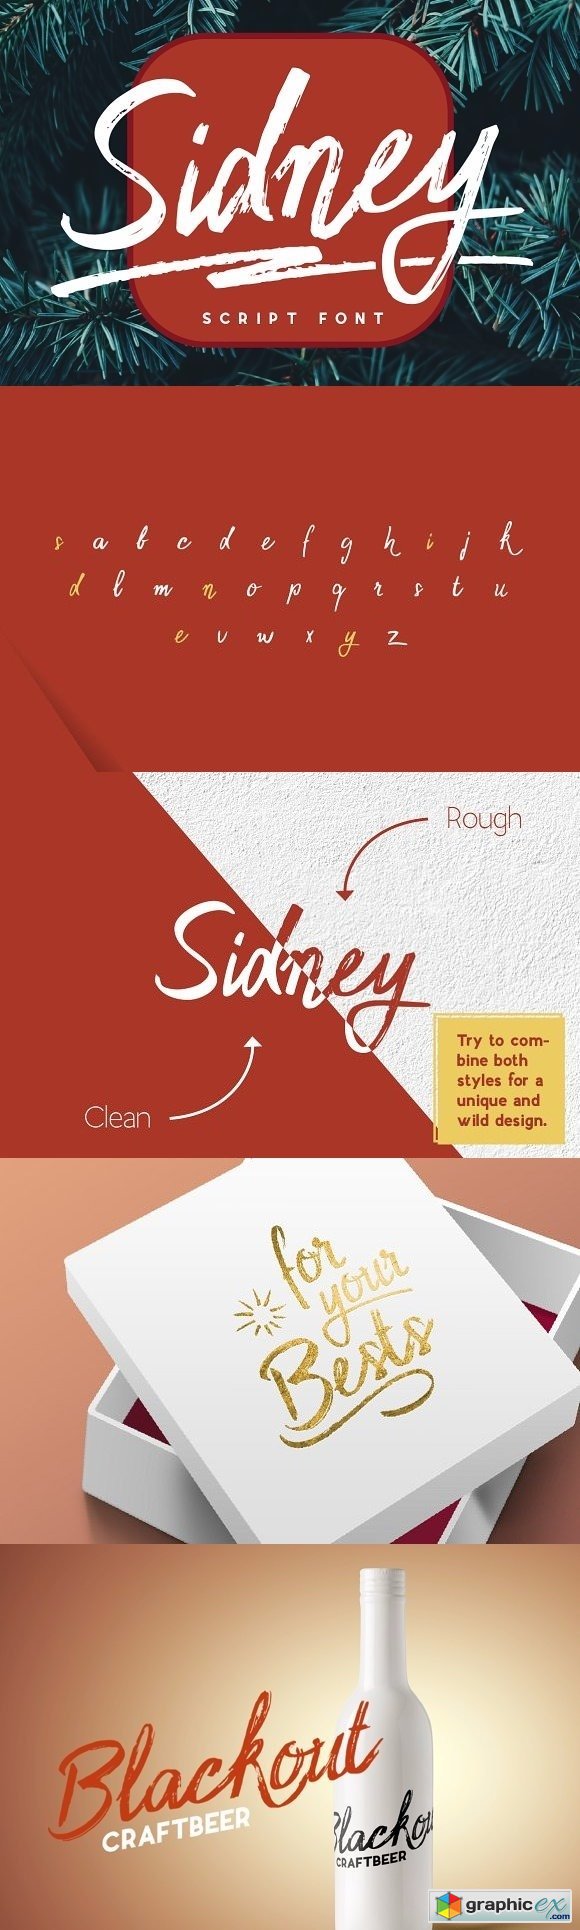 Sidney clean&rough